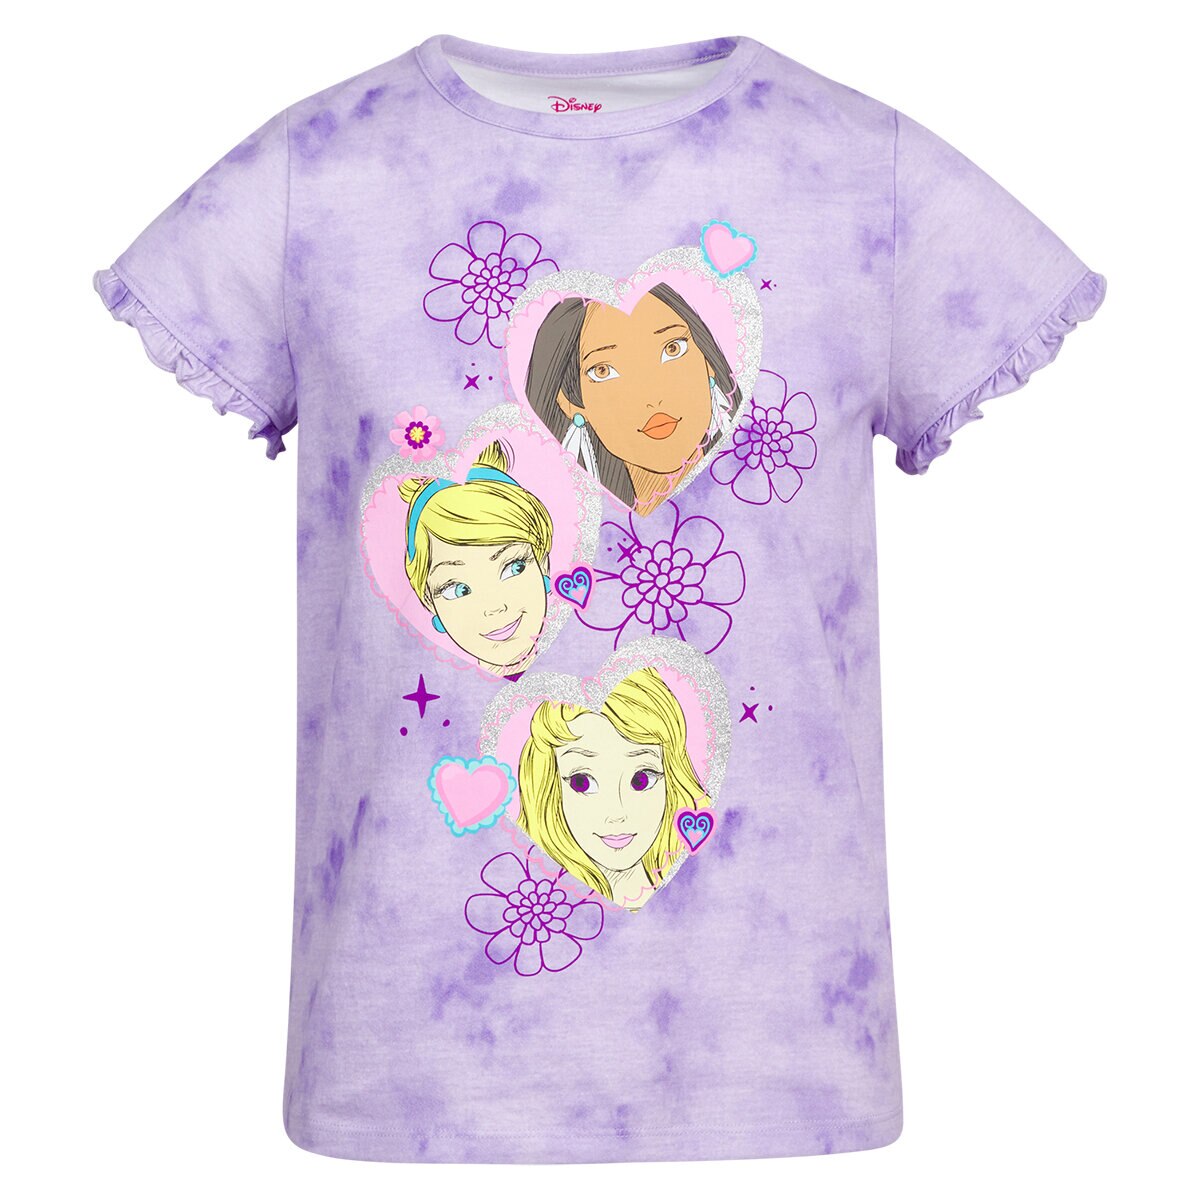 Marvel / Universal / Disney Paquete de 4 Camisetas de Personajes para Niño o Niña Niña - Princesas: 1-Blanco / 1-Morado / 1-Rosa / 1-Grís